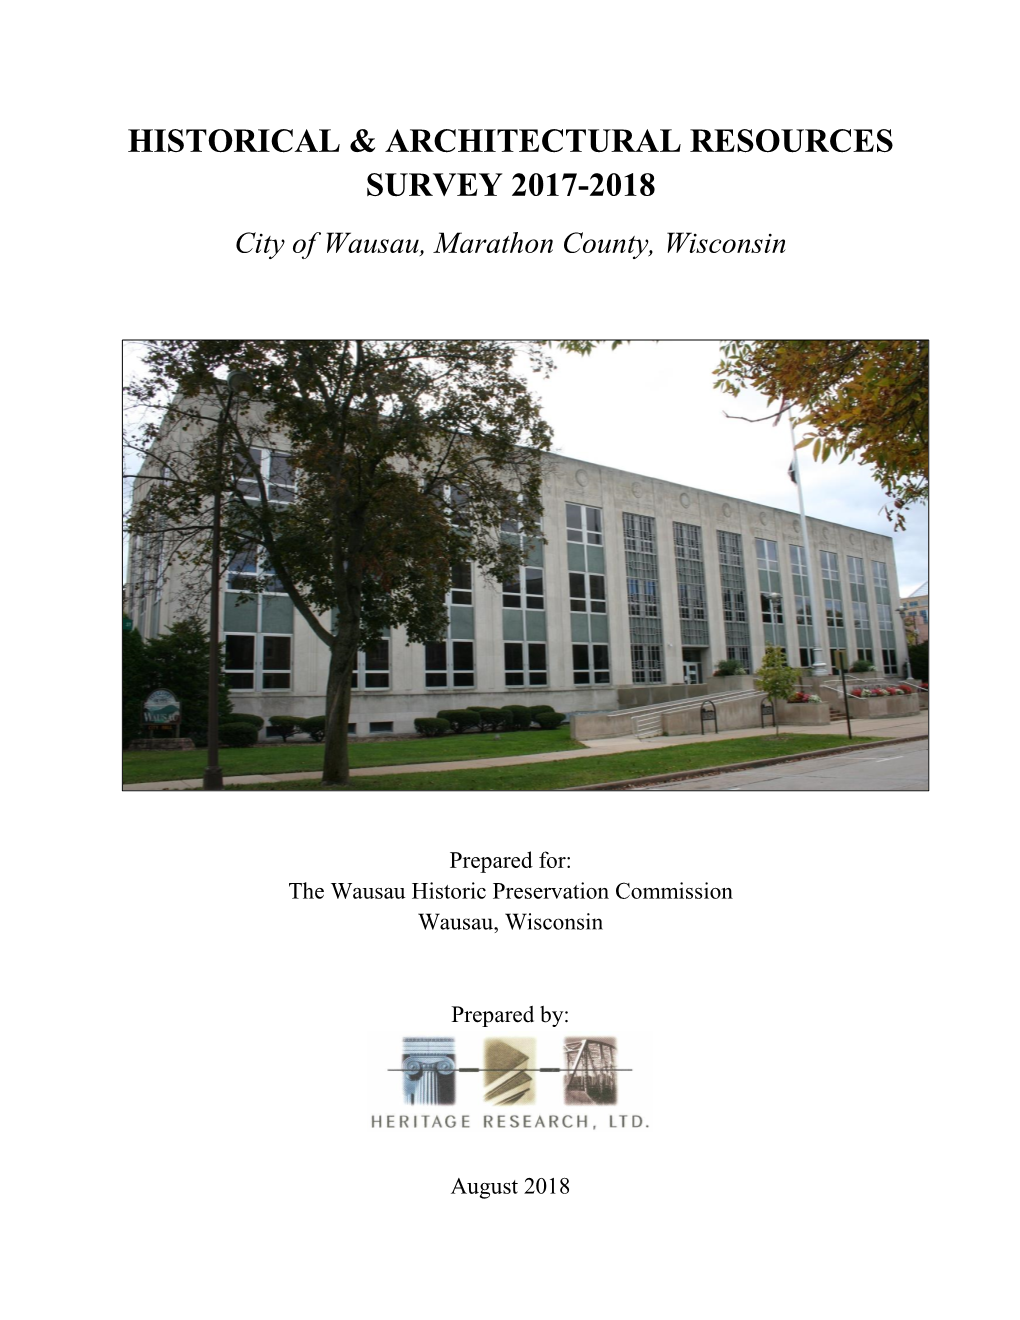 Historical & Architectural Resources Survey 2017-2018